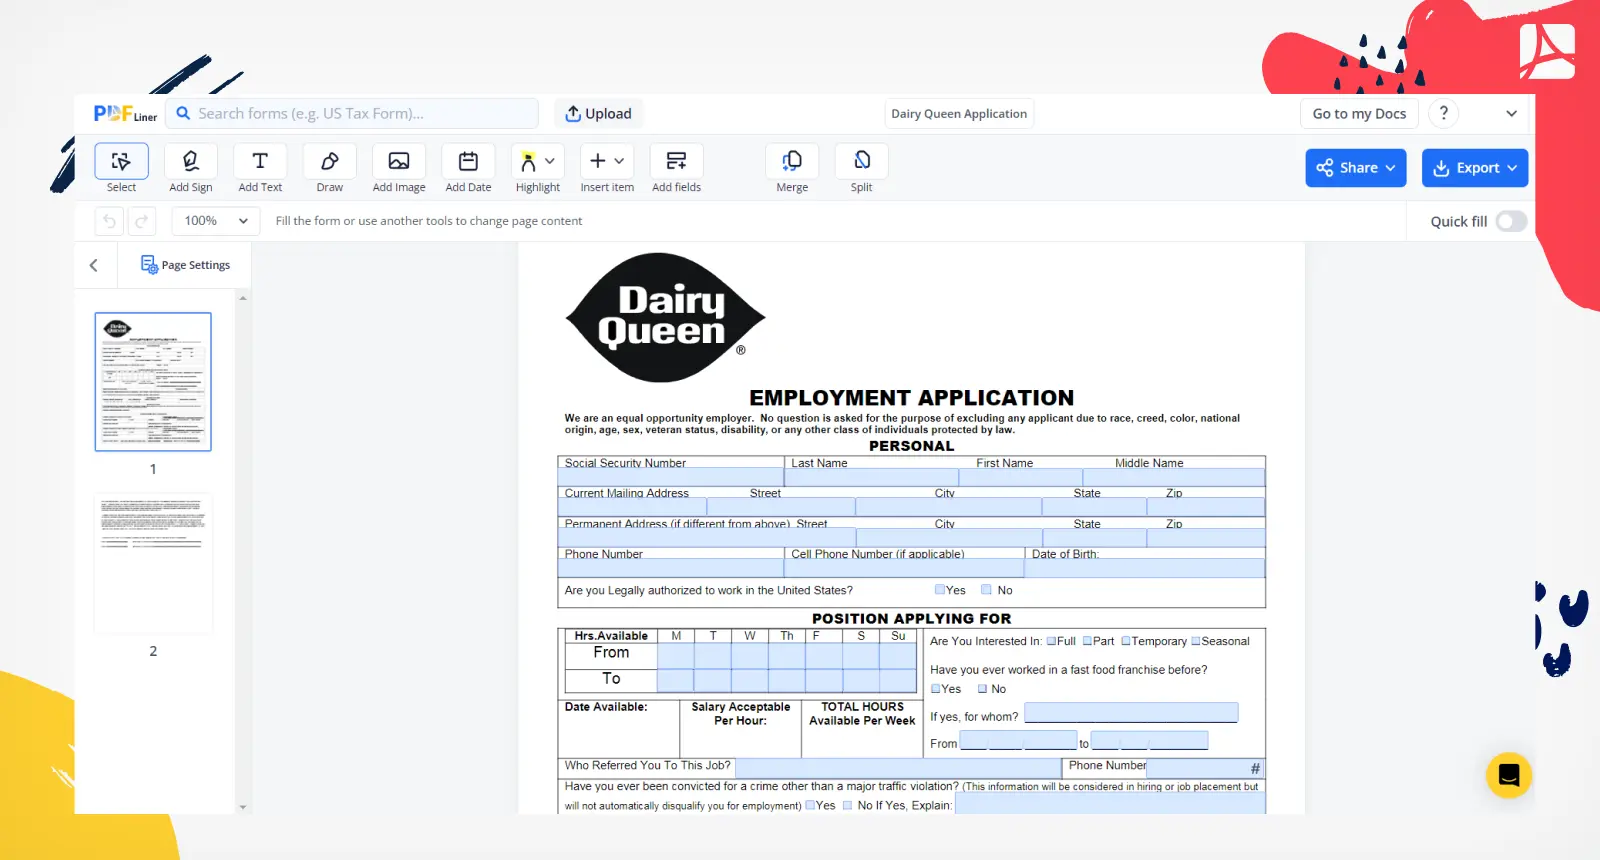 Dairy Queen Job Application Form Screenshot